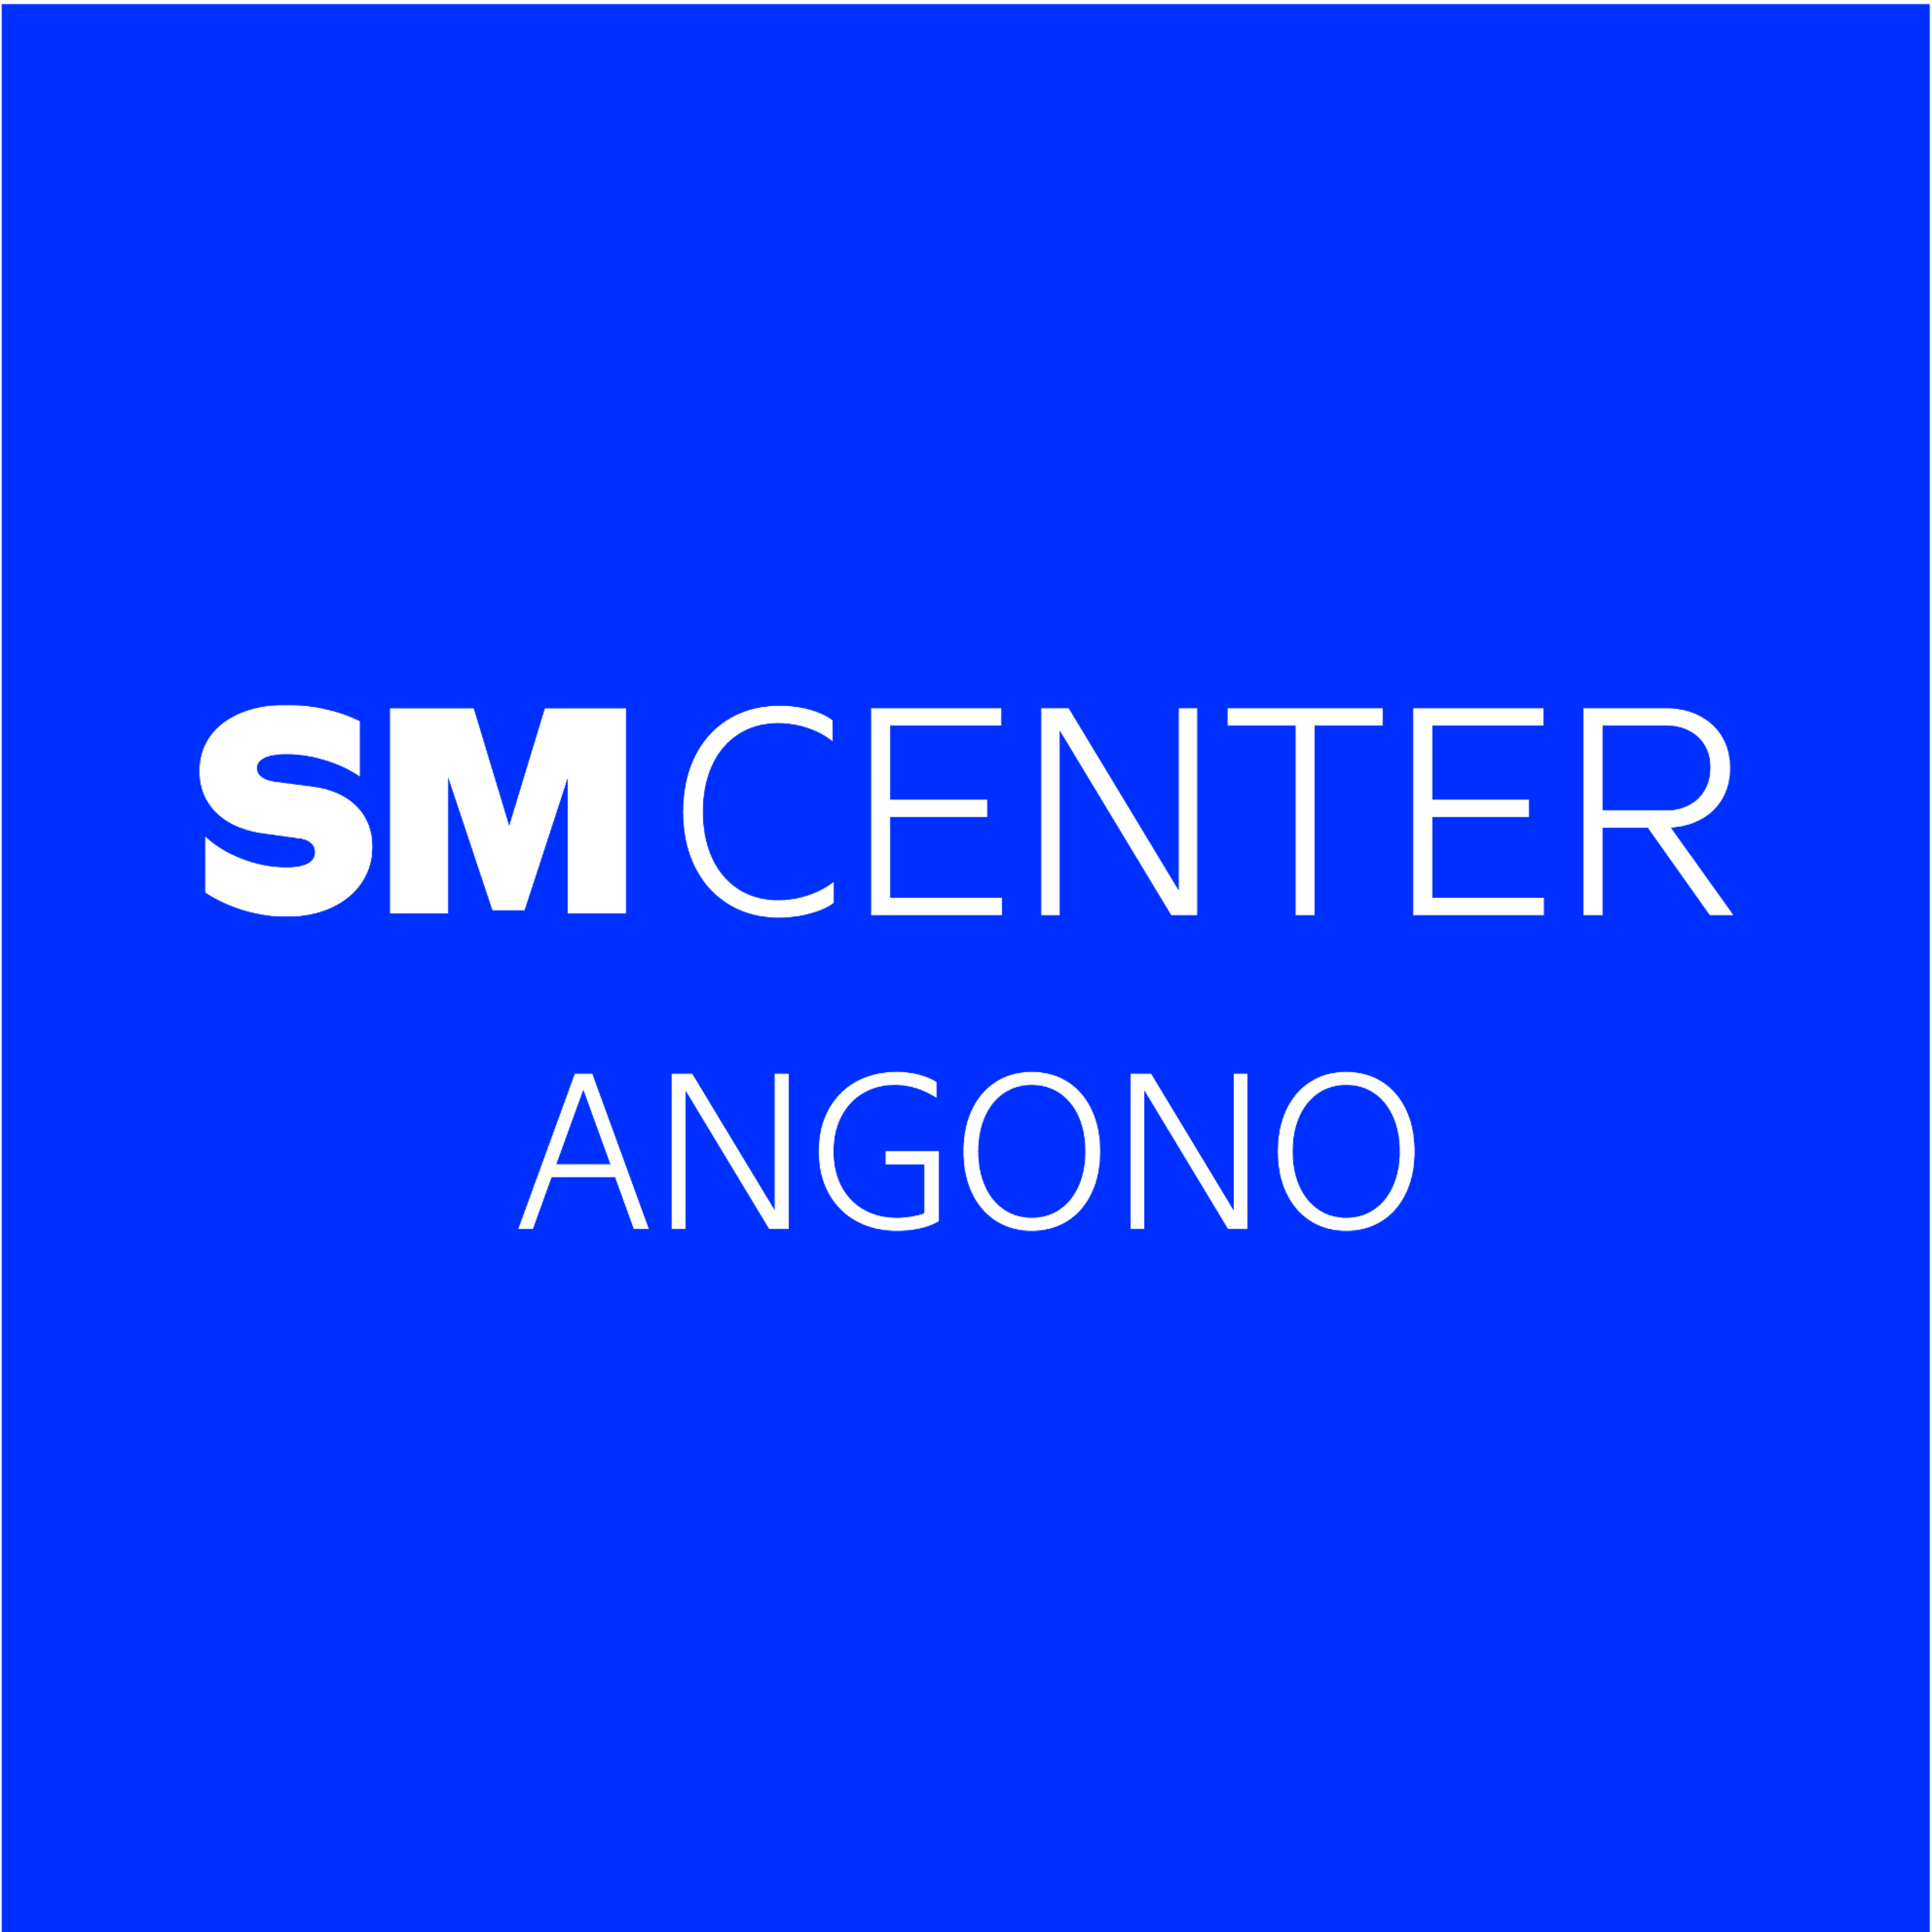 SM Center Angono